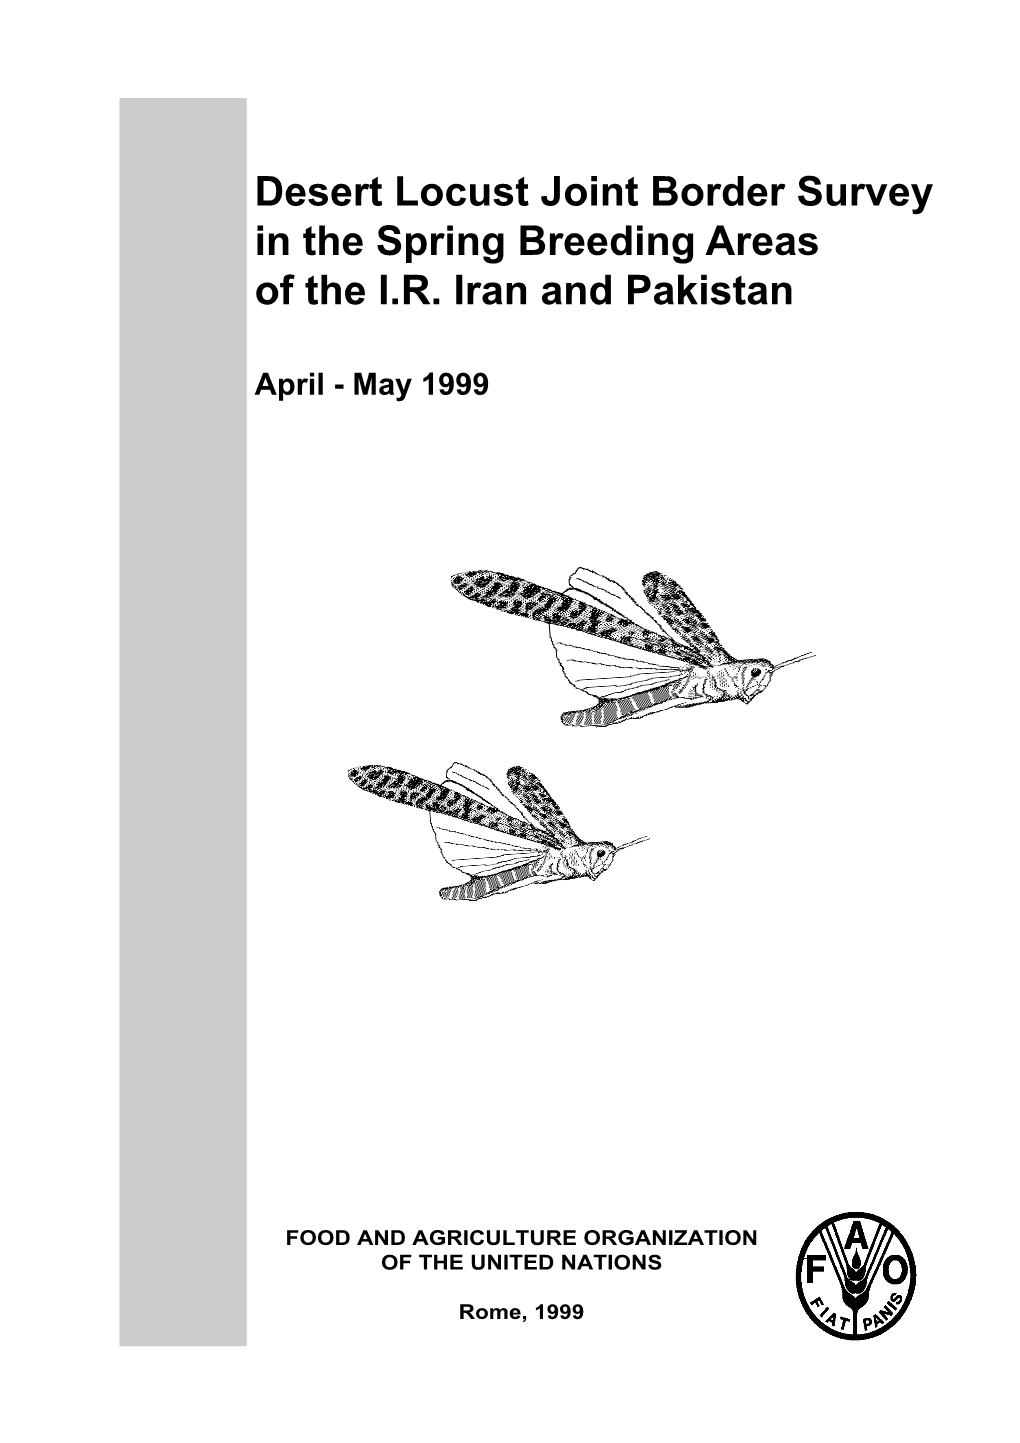 Desert Locust Joint Border Survey in the Spring Breeding Areas of the I.R